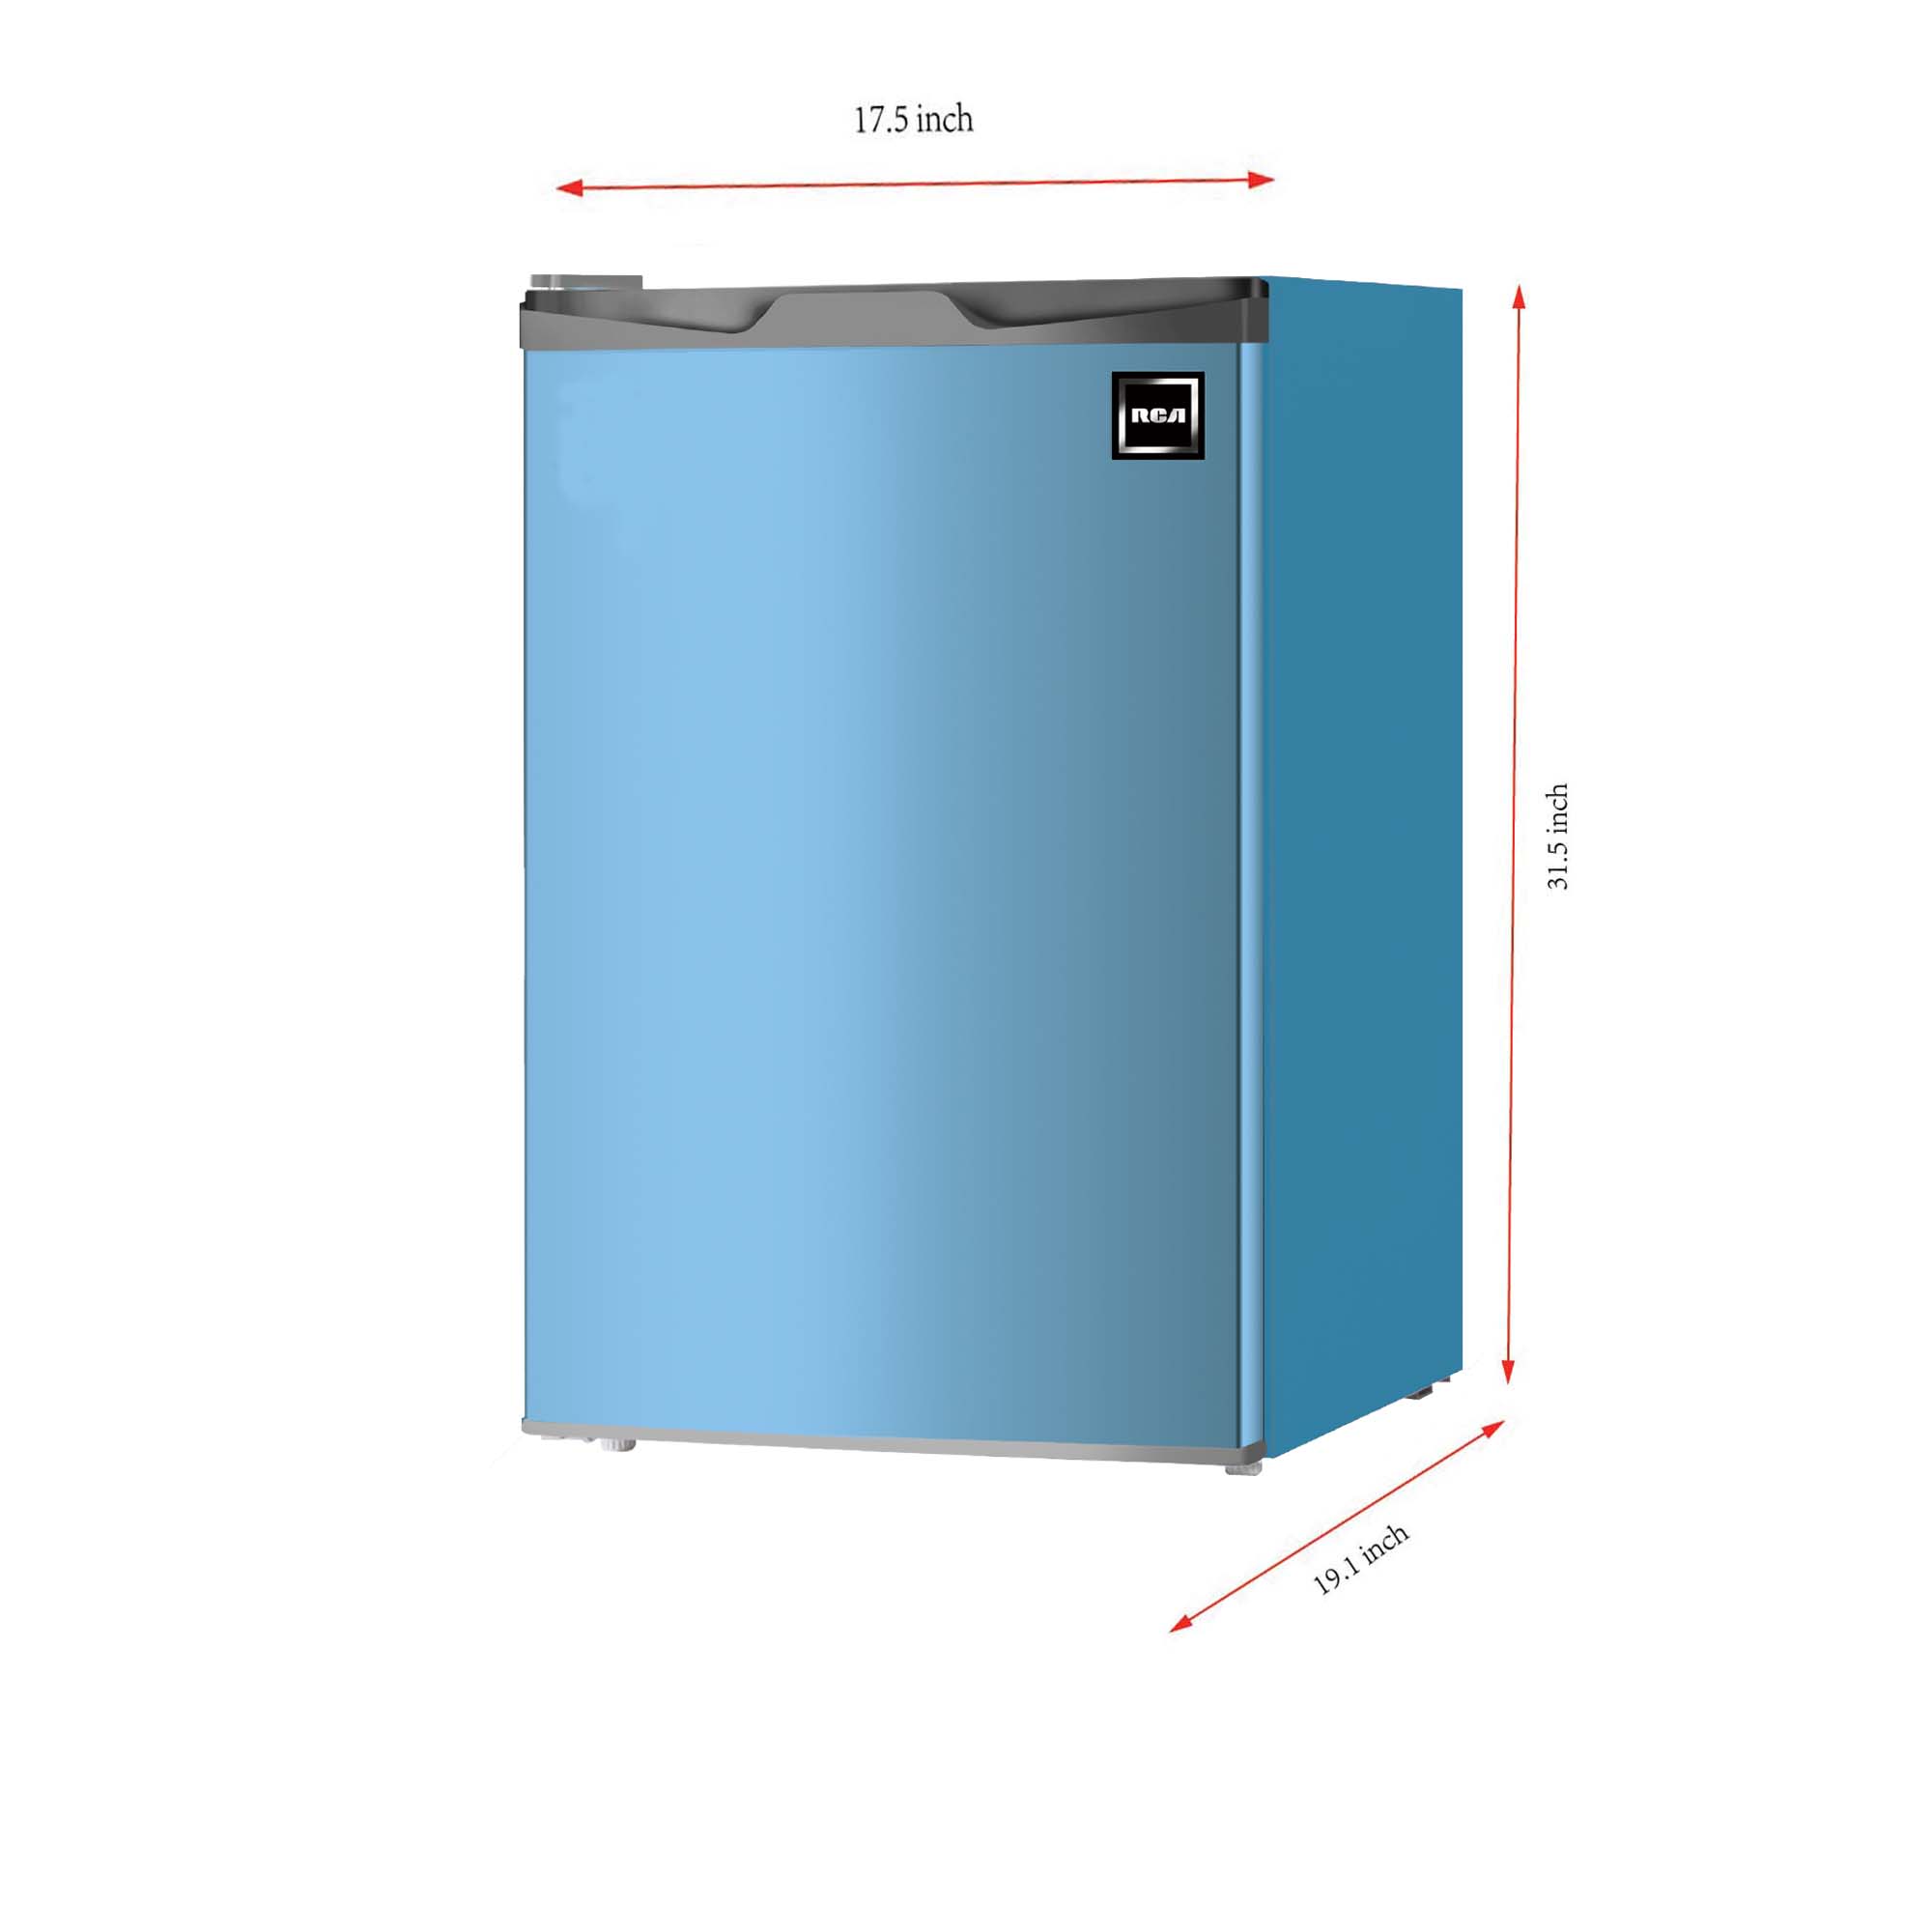 RCA 3.2 Cu. Ft. Single Door Compact Refrigerator RFR320, Blue - image 3 of 5